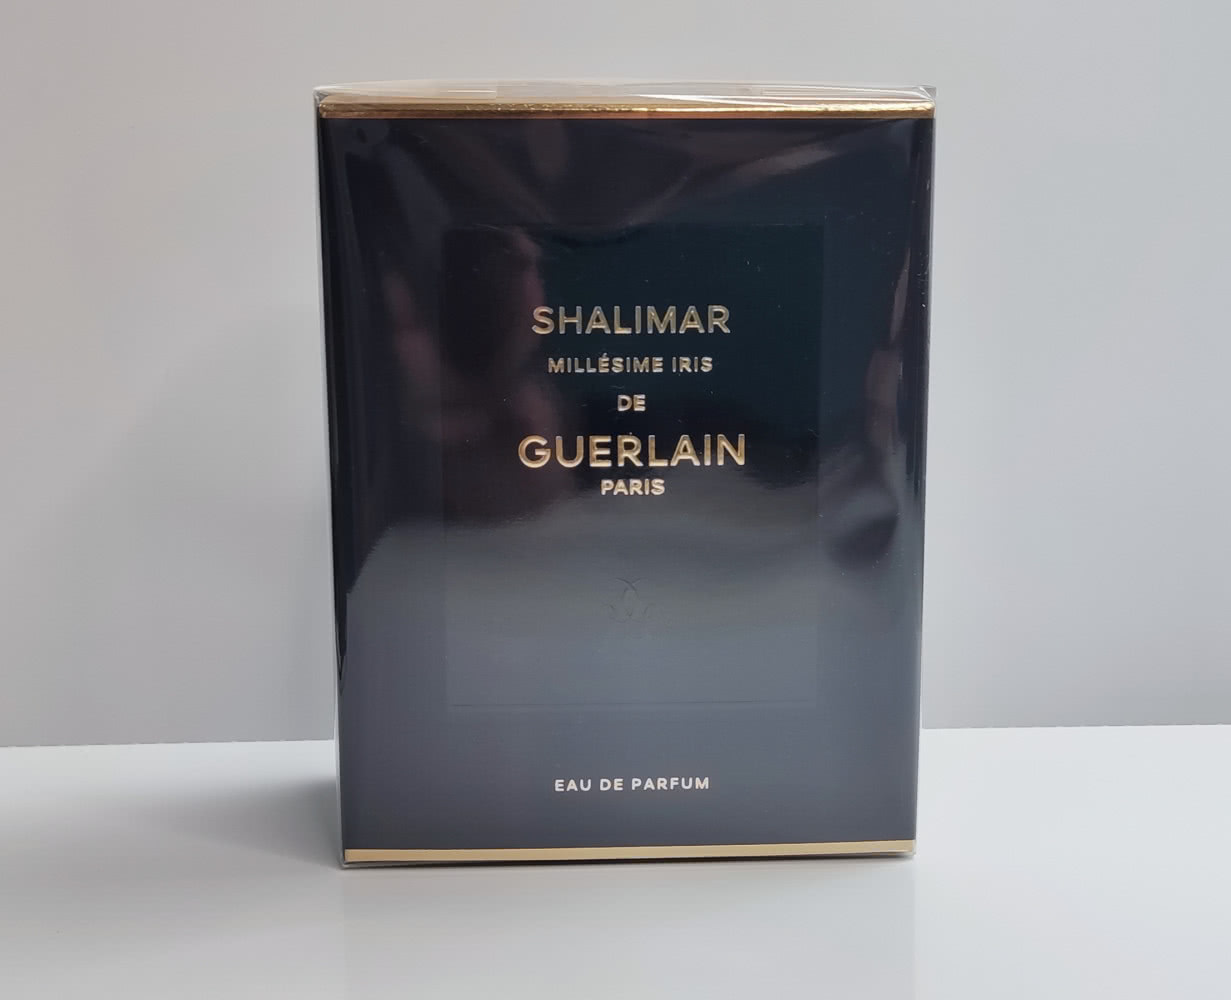 Guerlain Shalimar Millésime Iris edp 50 ml